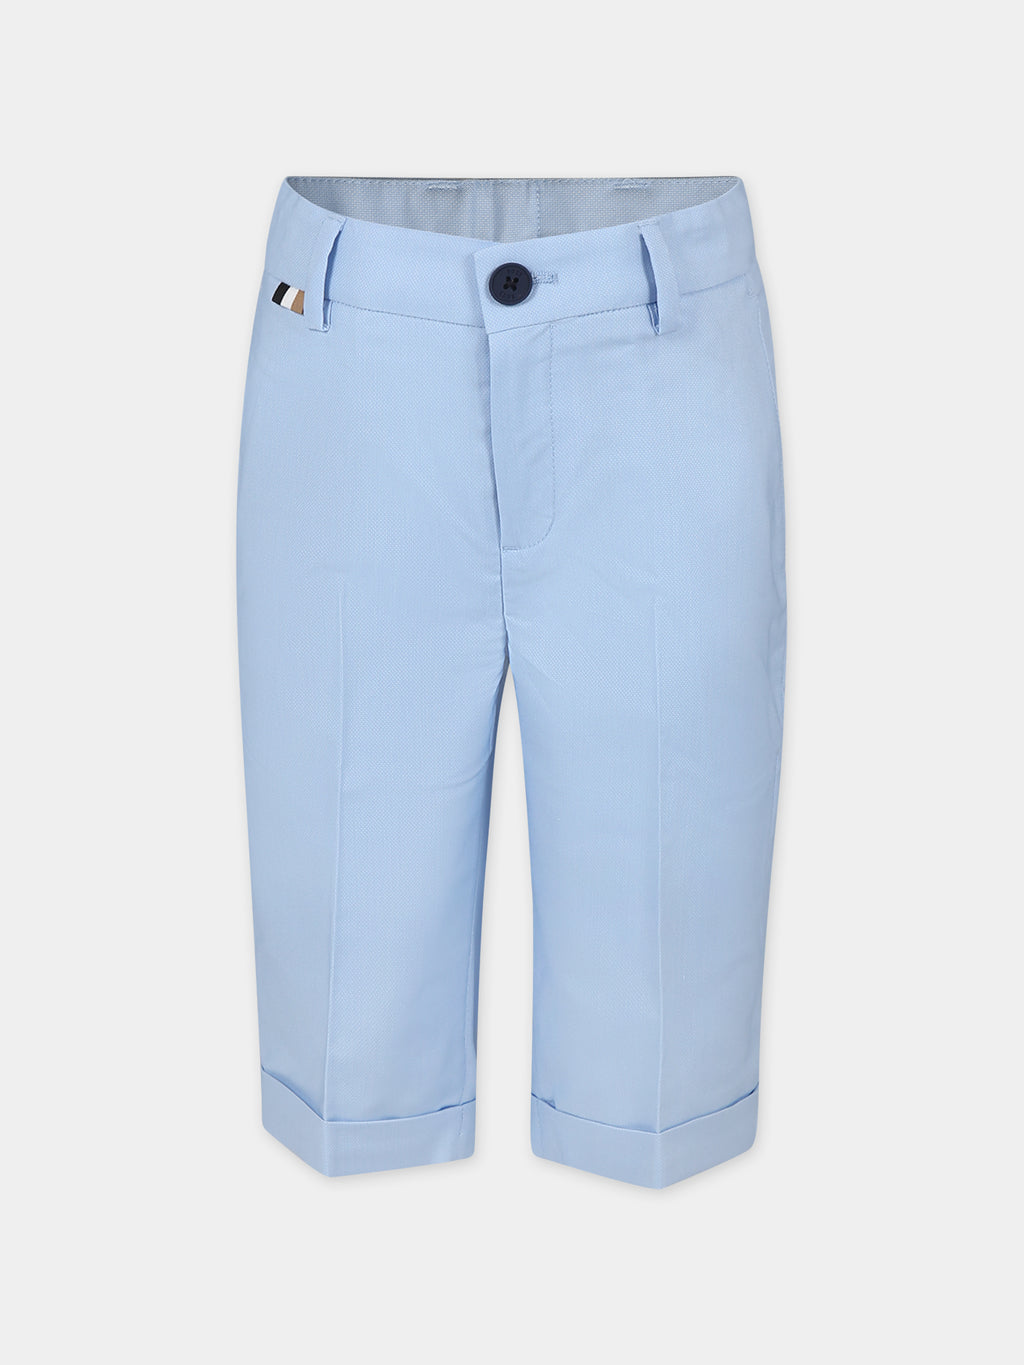 Elegant sky blue shorts for boy